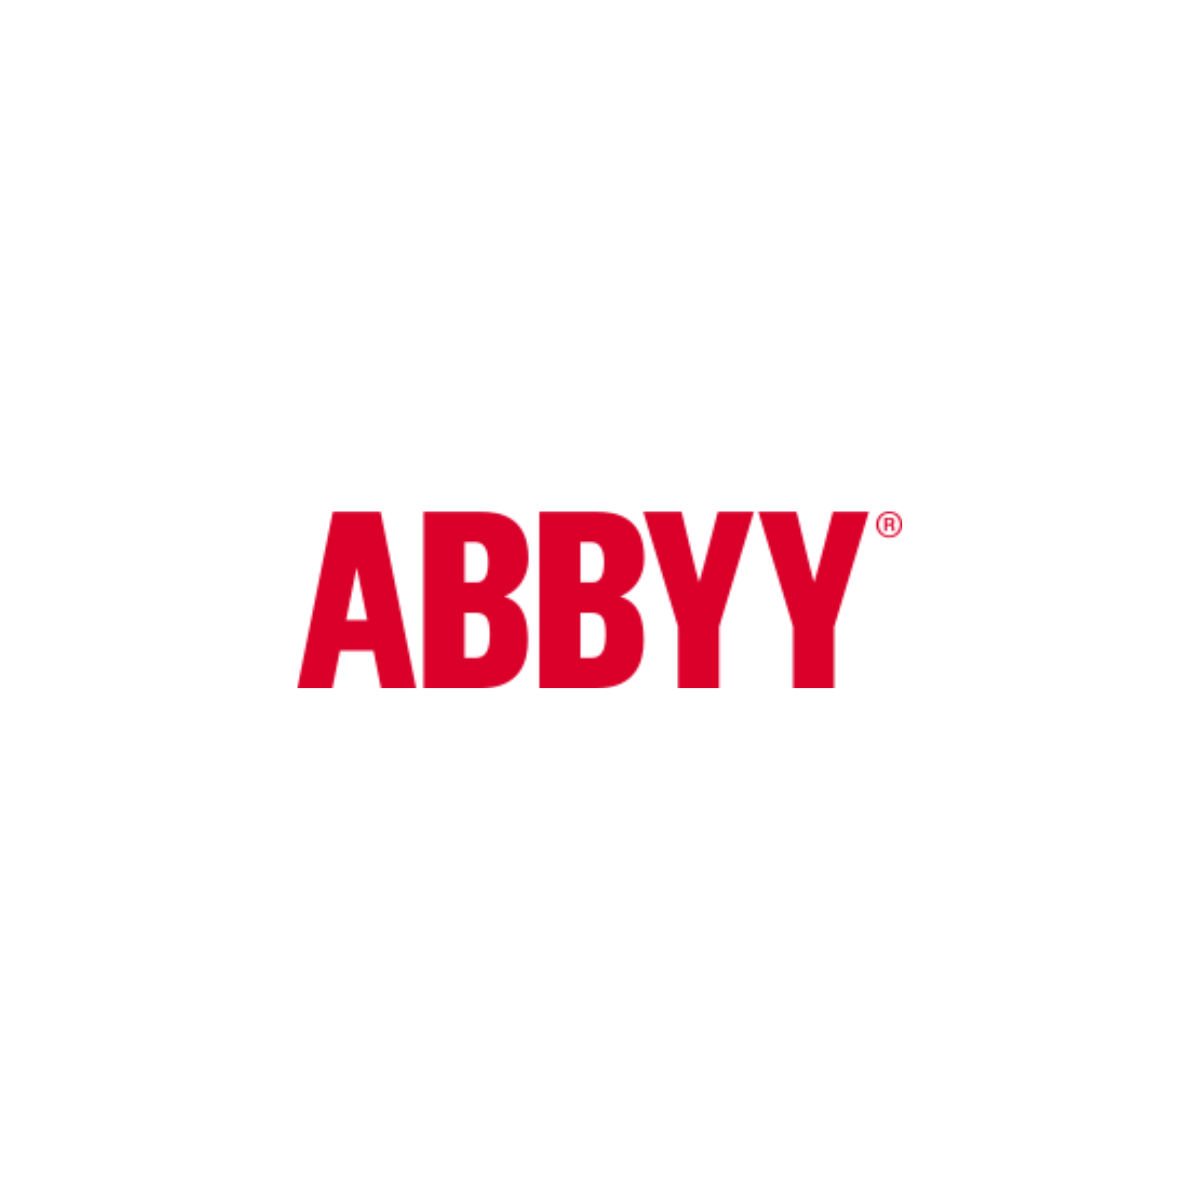 ABBYY logo cybersecurity